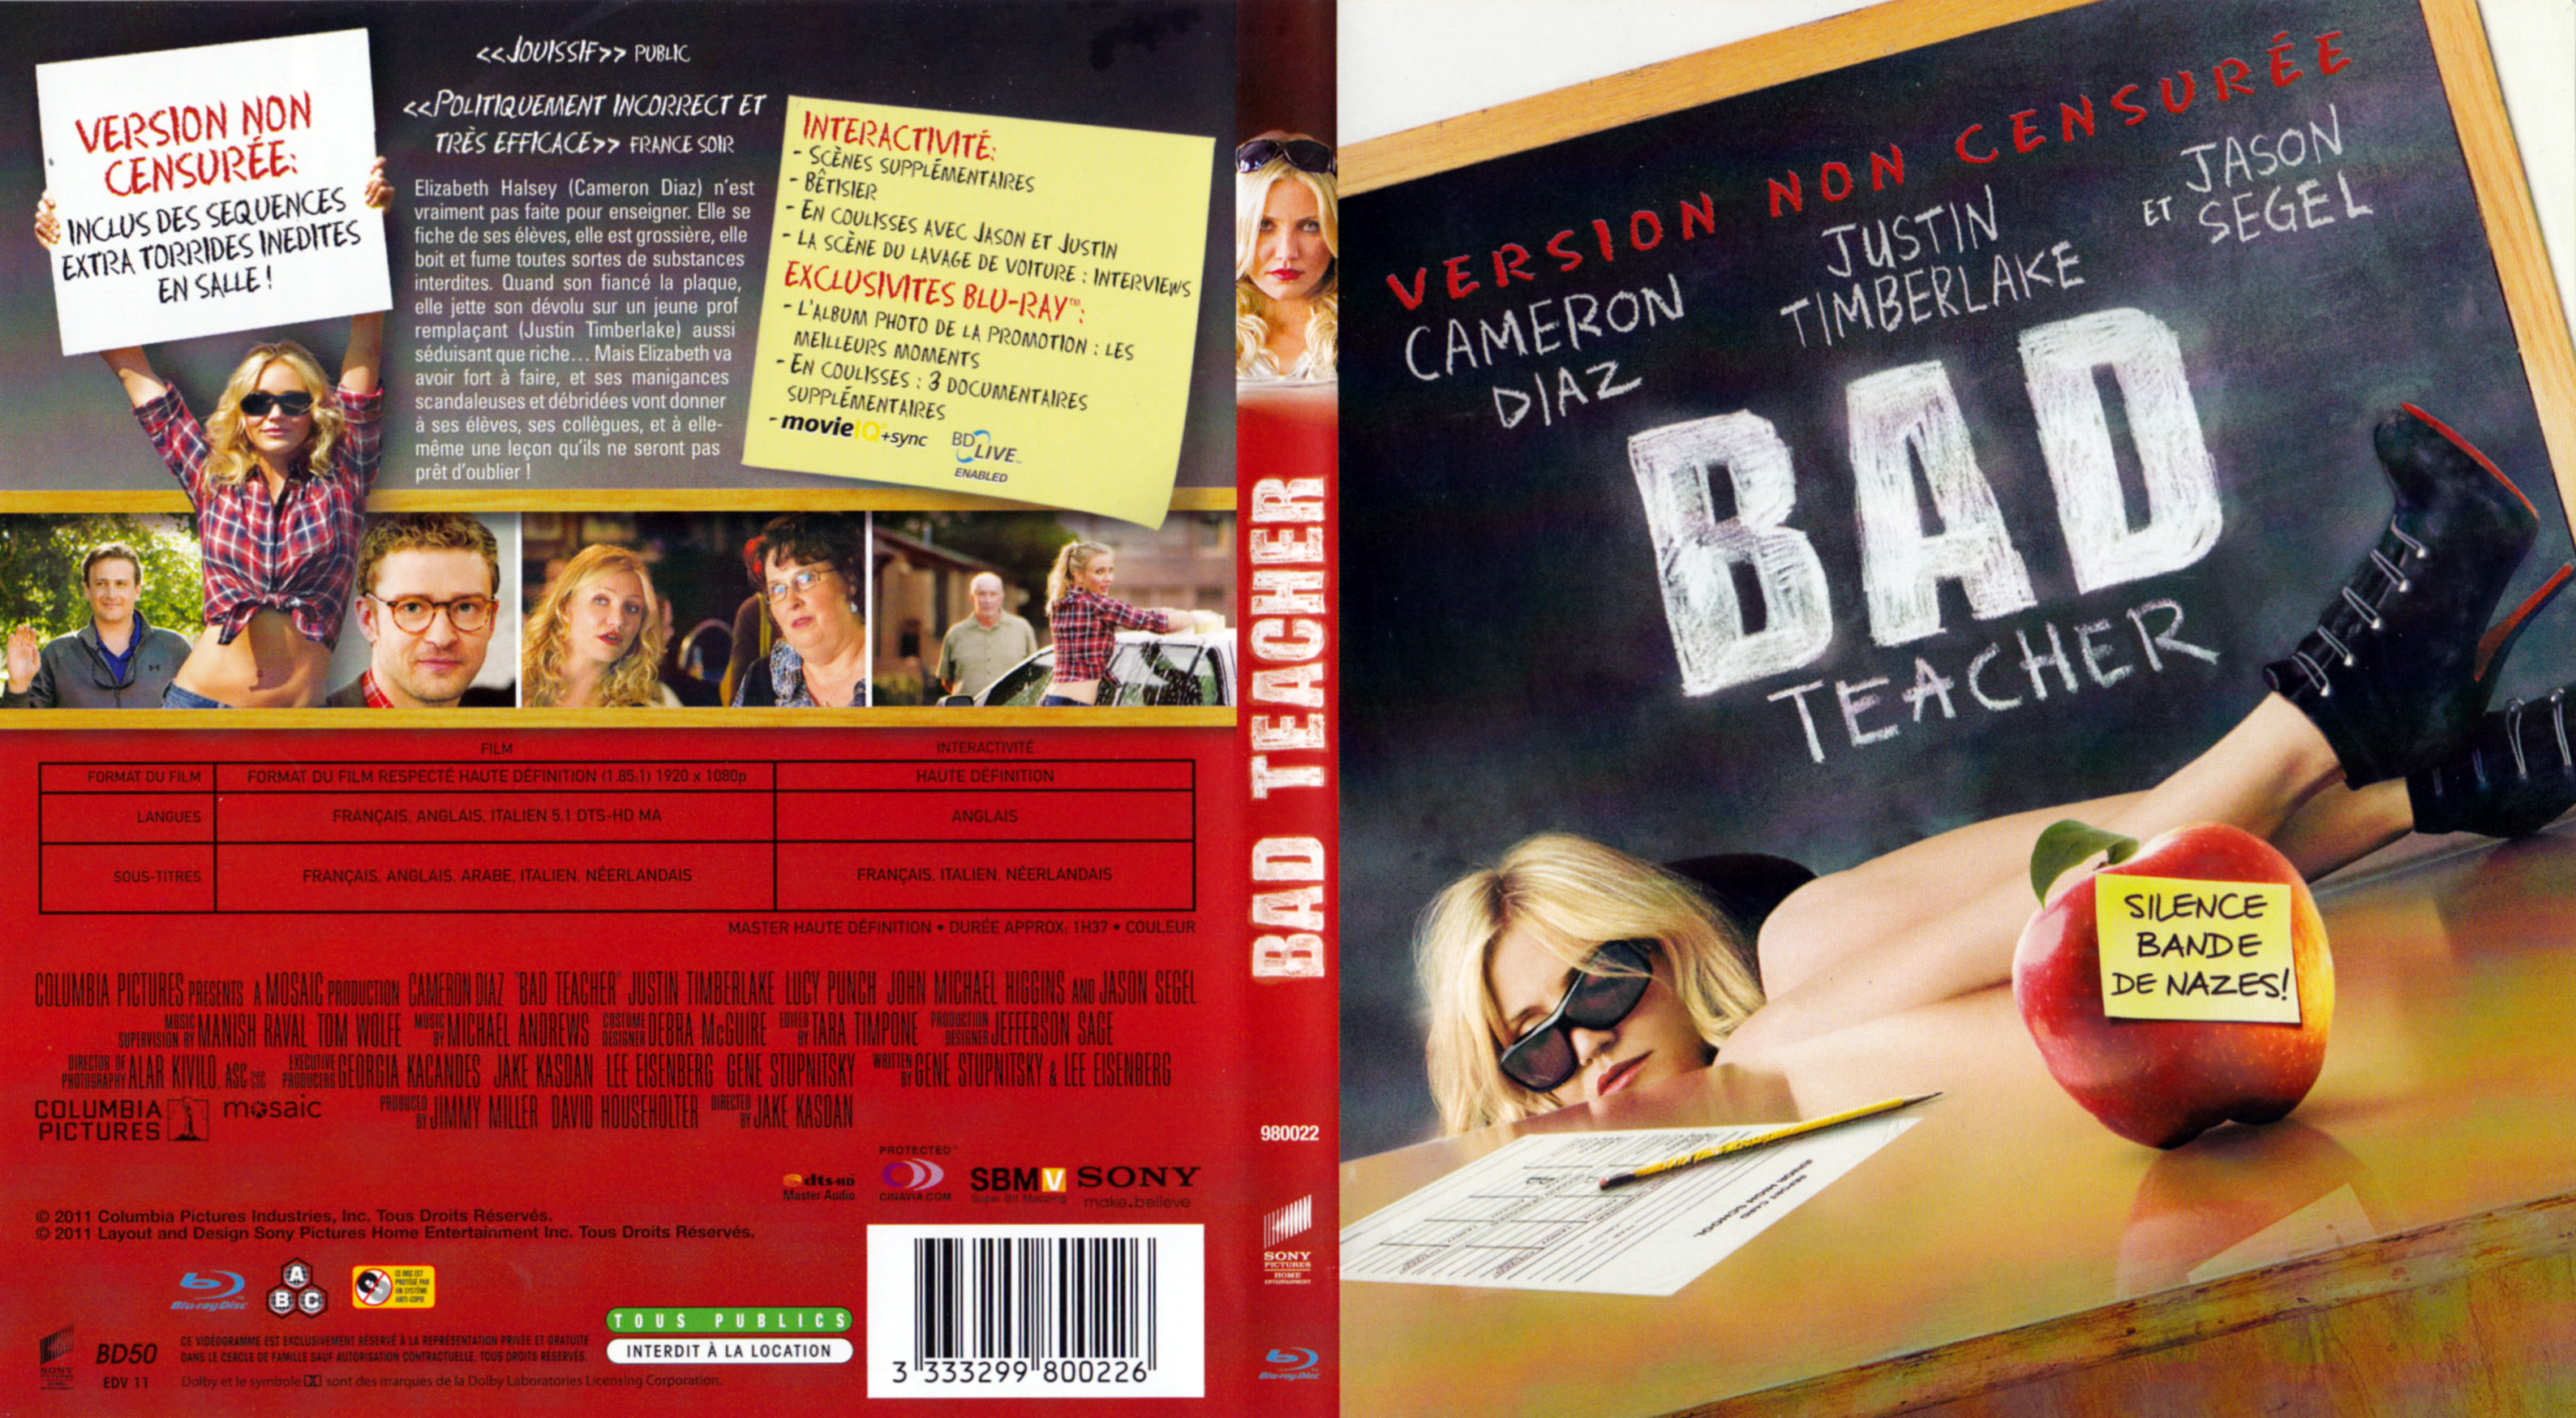 Jaquette DVD Bad teacher (BLU-RAY)